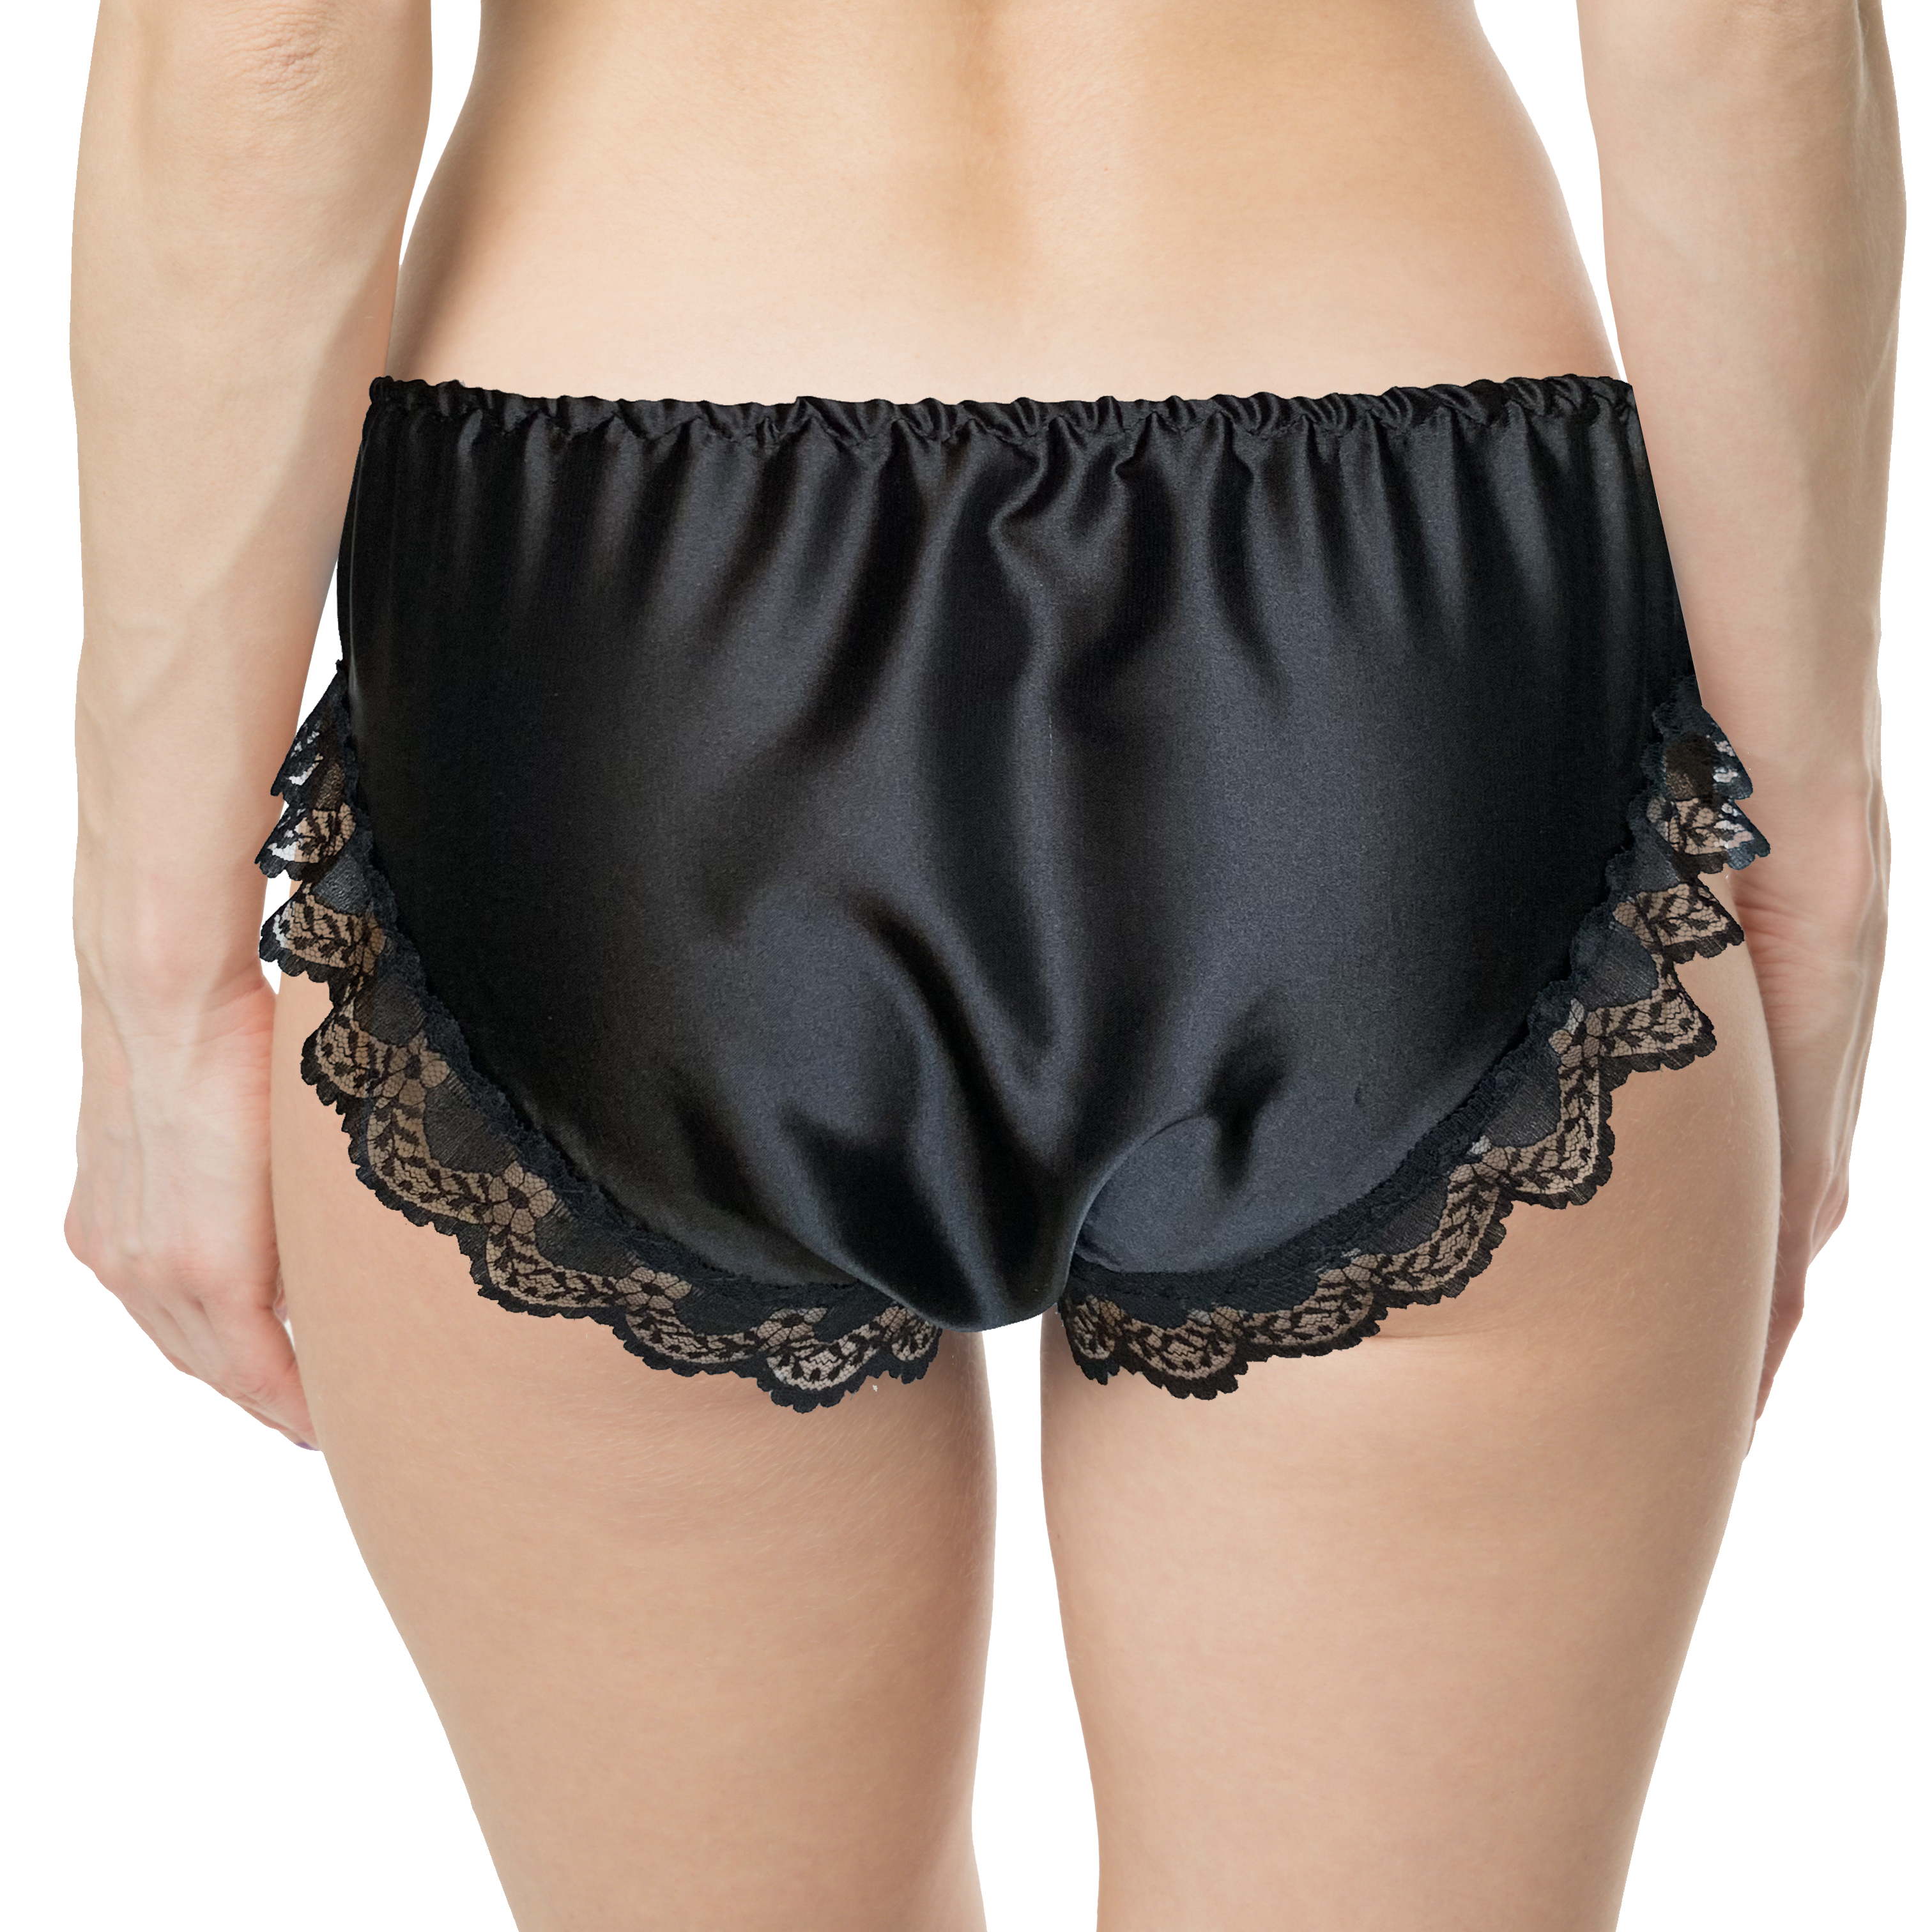 Black Satin Lace Sissy Full Panties Bikini Knicker Underwear Size Ebay